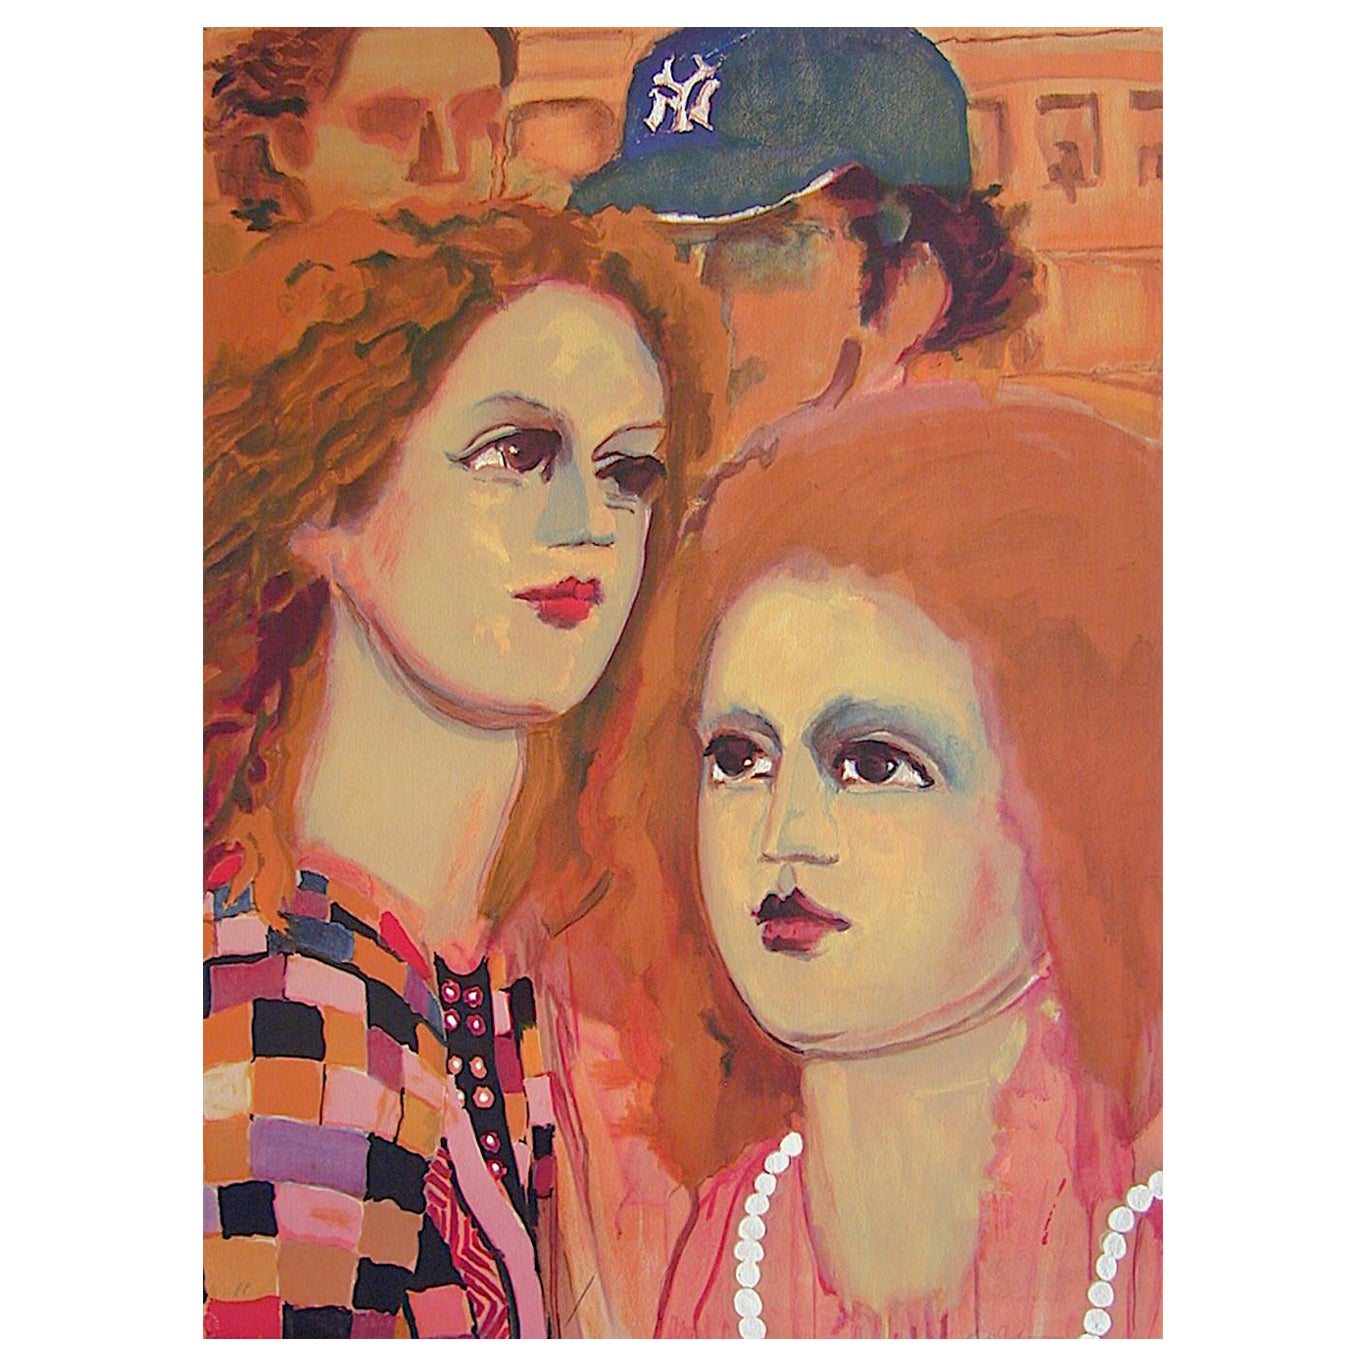 NY SCENE: FACES Signierte Lithographie, Porträtfrau mit rotem Haar, Mann mit blauer Yankee-Kappe, signiert